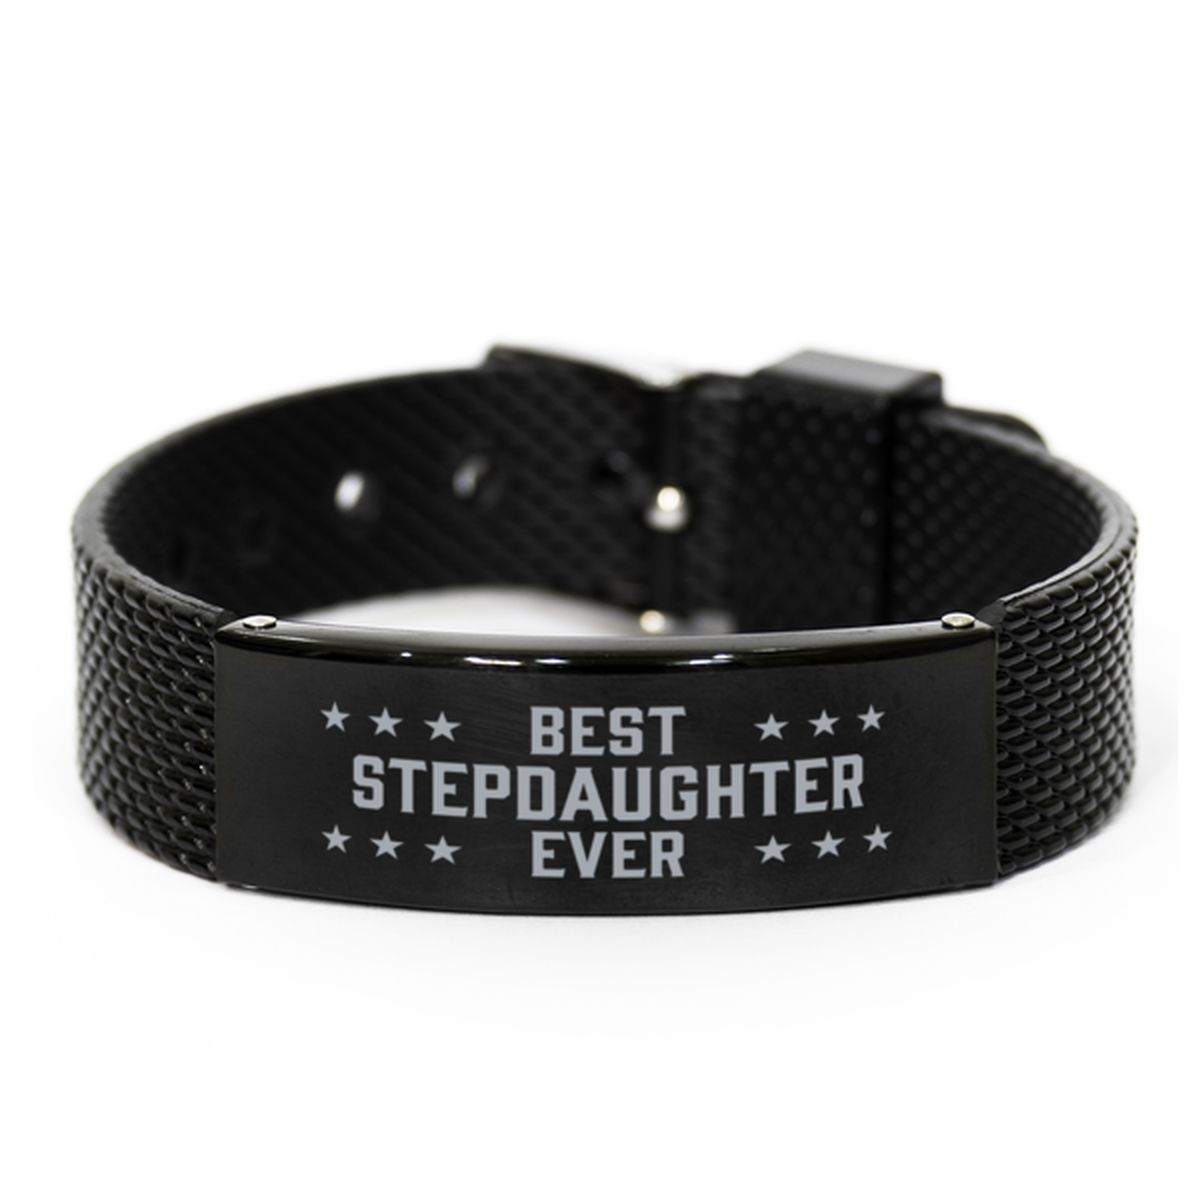 Best Stepdaughter Ever Stepdaughter Gifts, Gag Engraved Bracelet For Stepdaughter, Best Family Gifts For Women